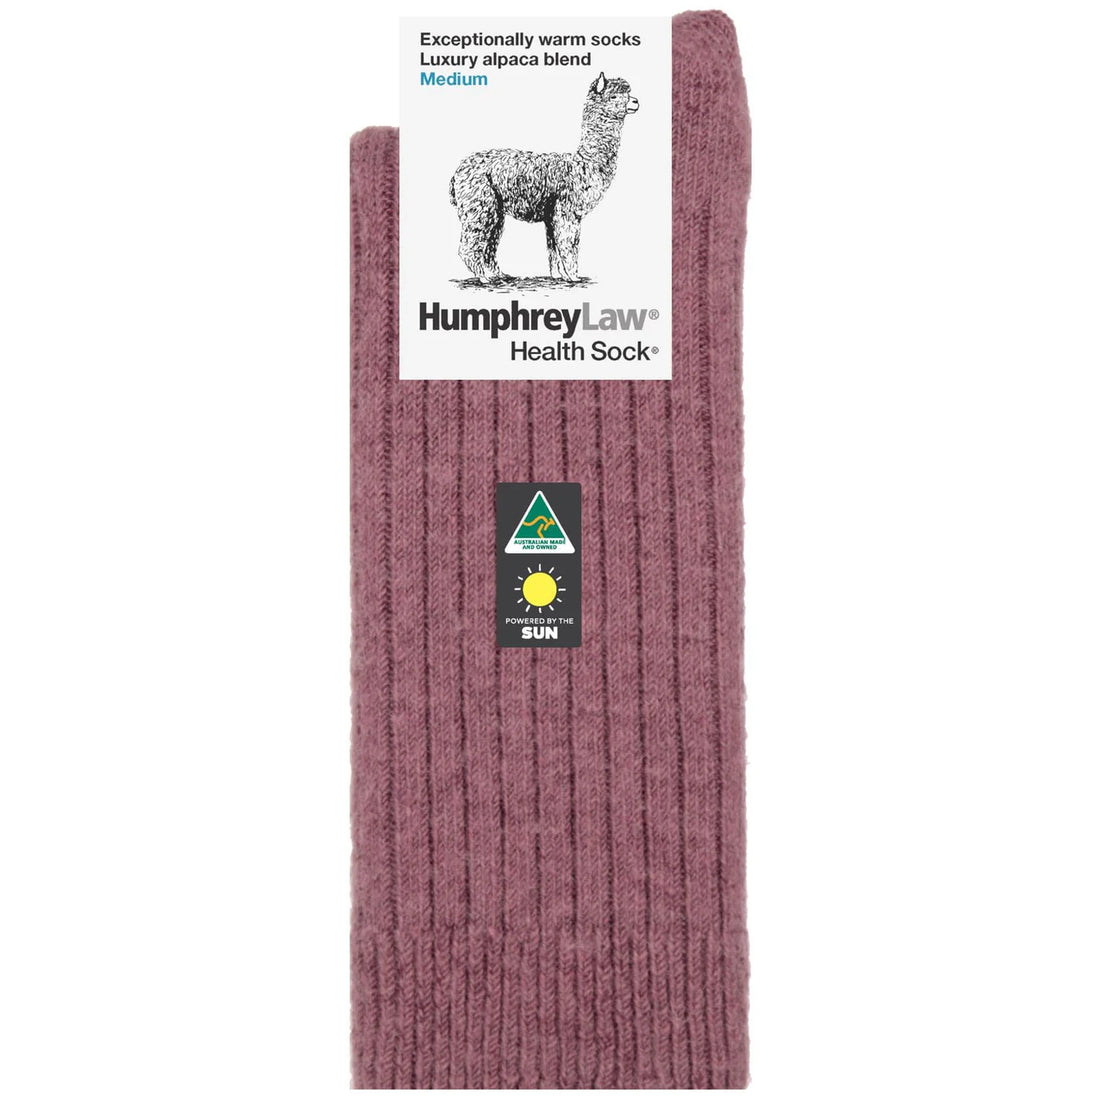 Humphrey Law Exceptionally Warm Alpaca Health Sock Old Rose